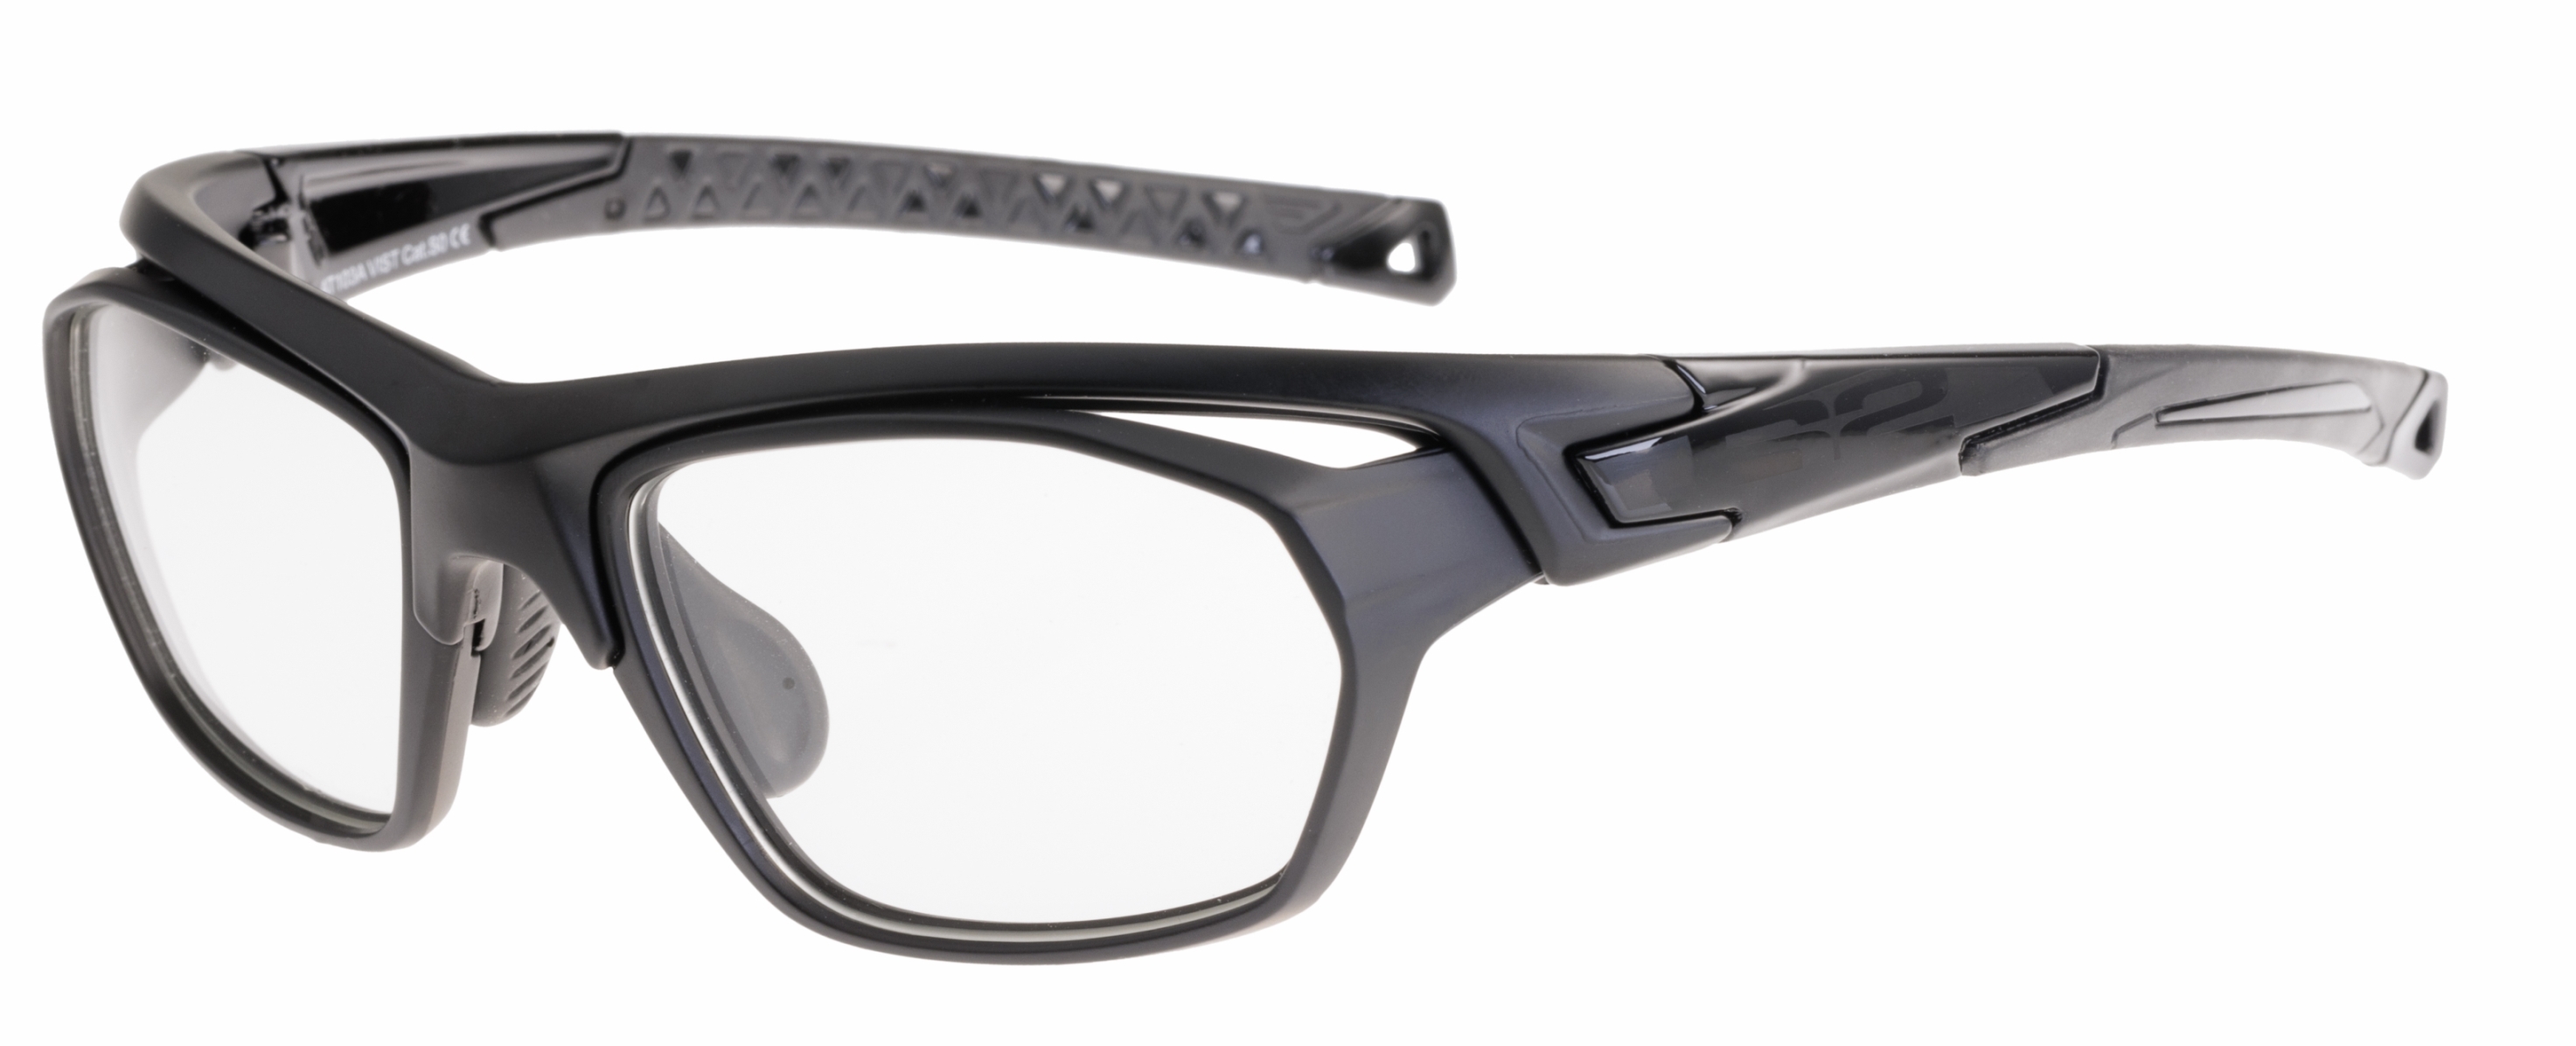 Sportovní dioptrické brýle R2 VIST AT103A - standard